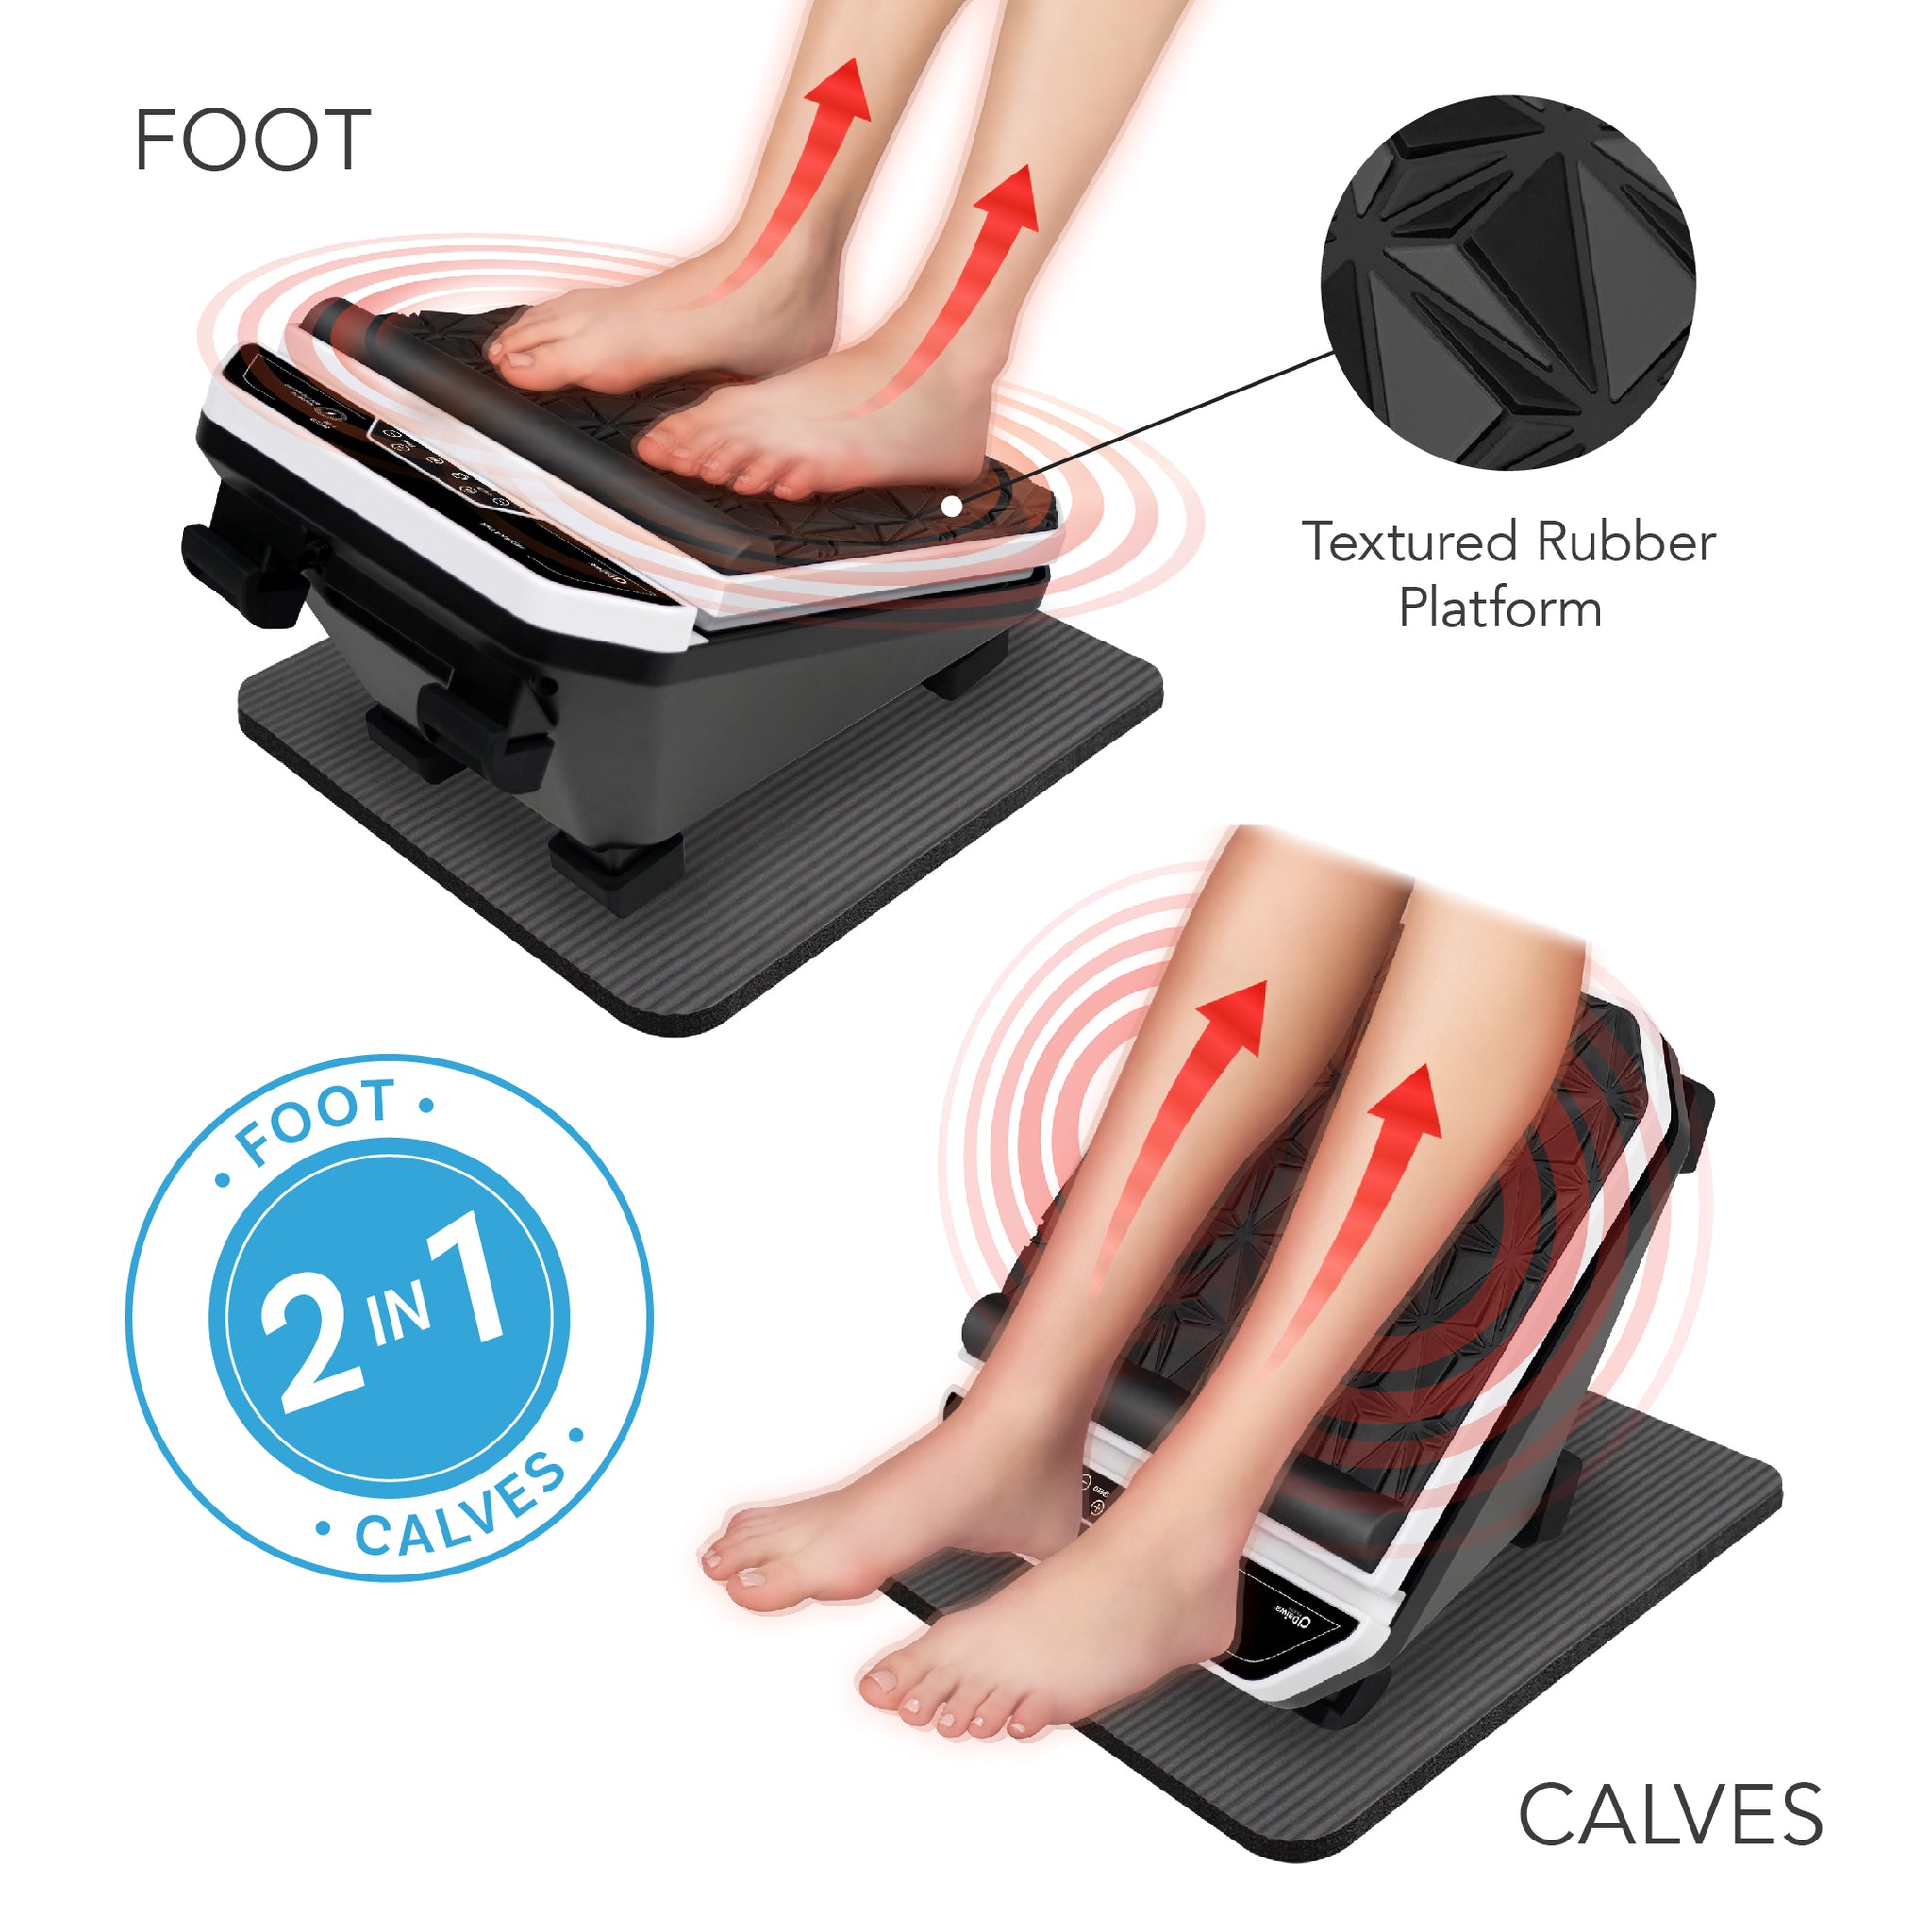 Footvibe Deluxe Vibrating Foot Massager Reduce Neuropathy & Arthritis Pain USJ-888